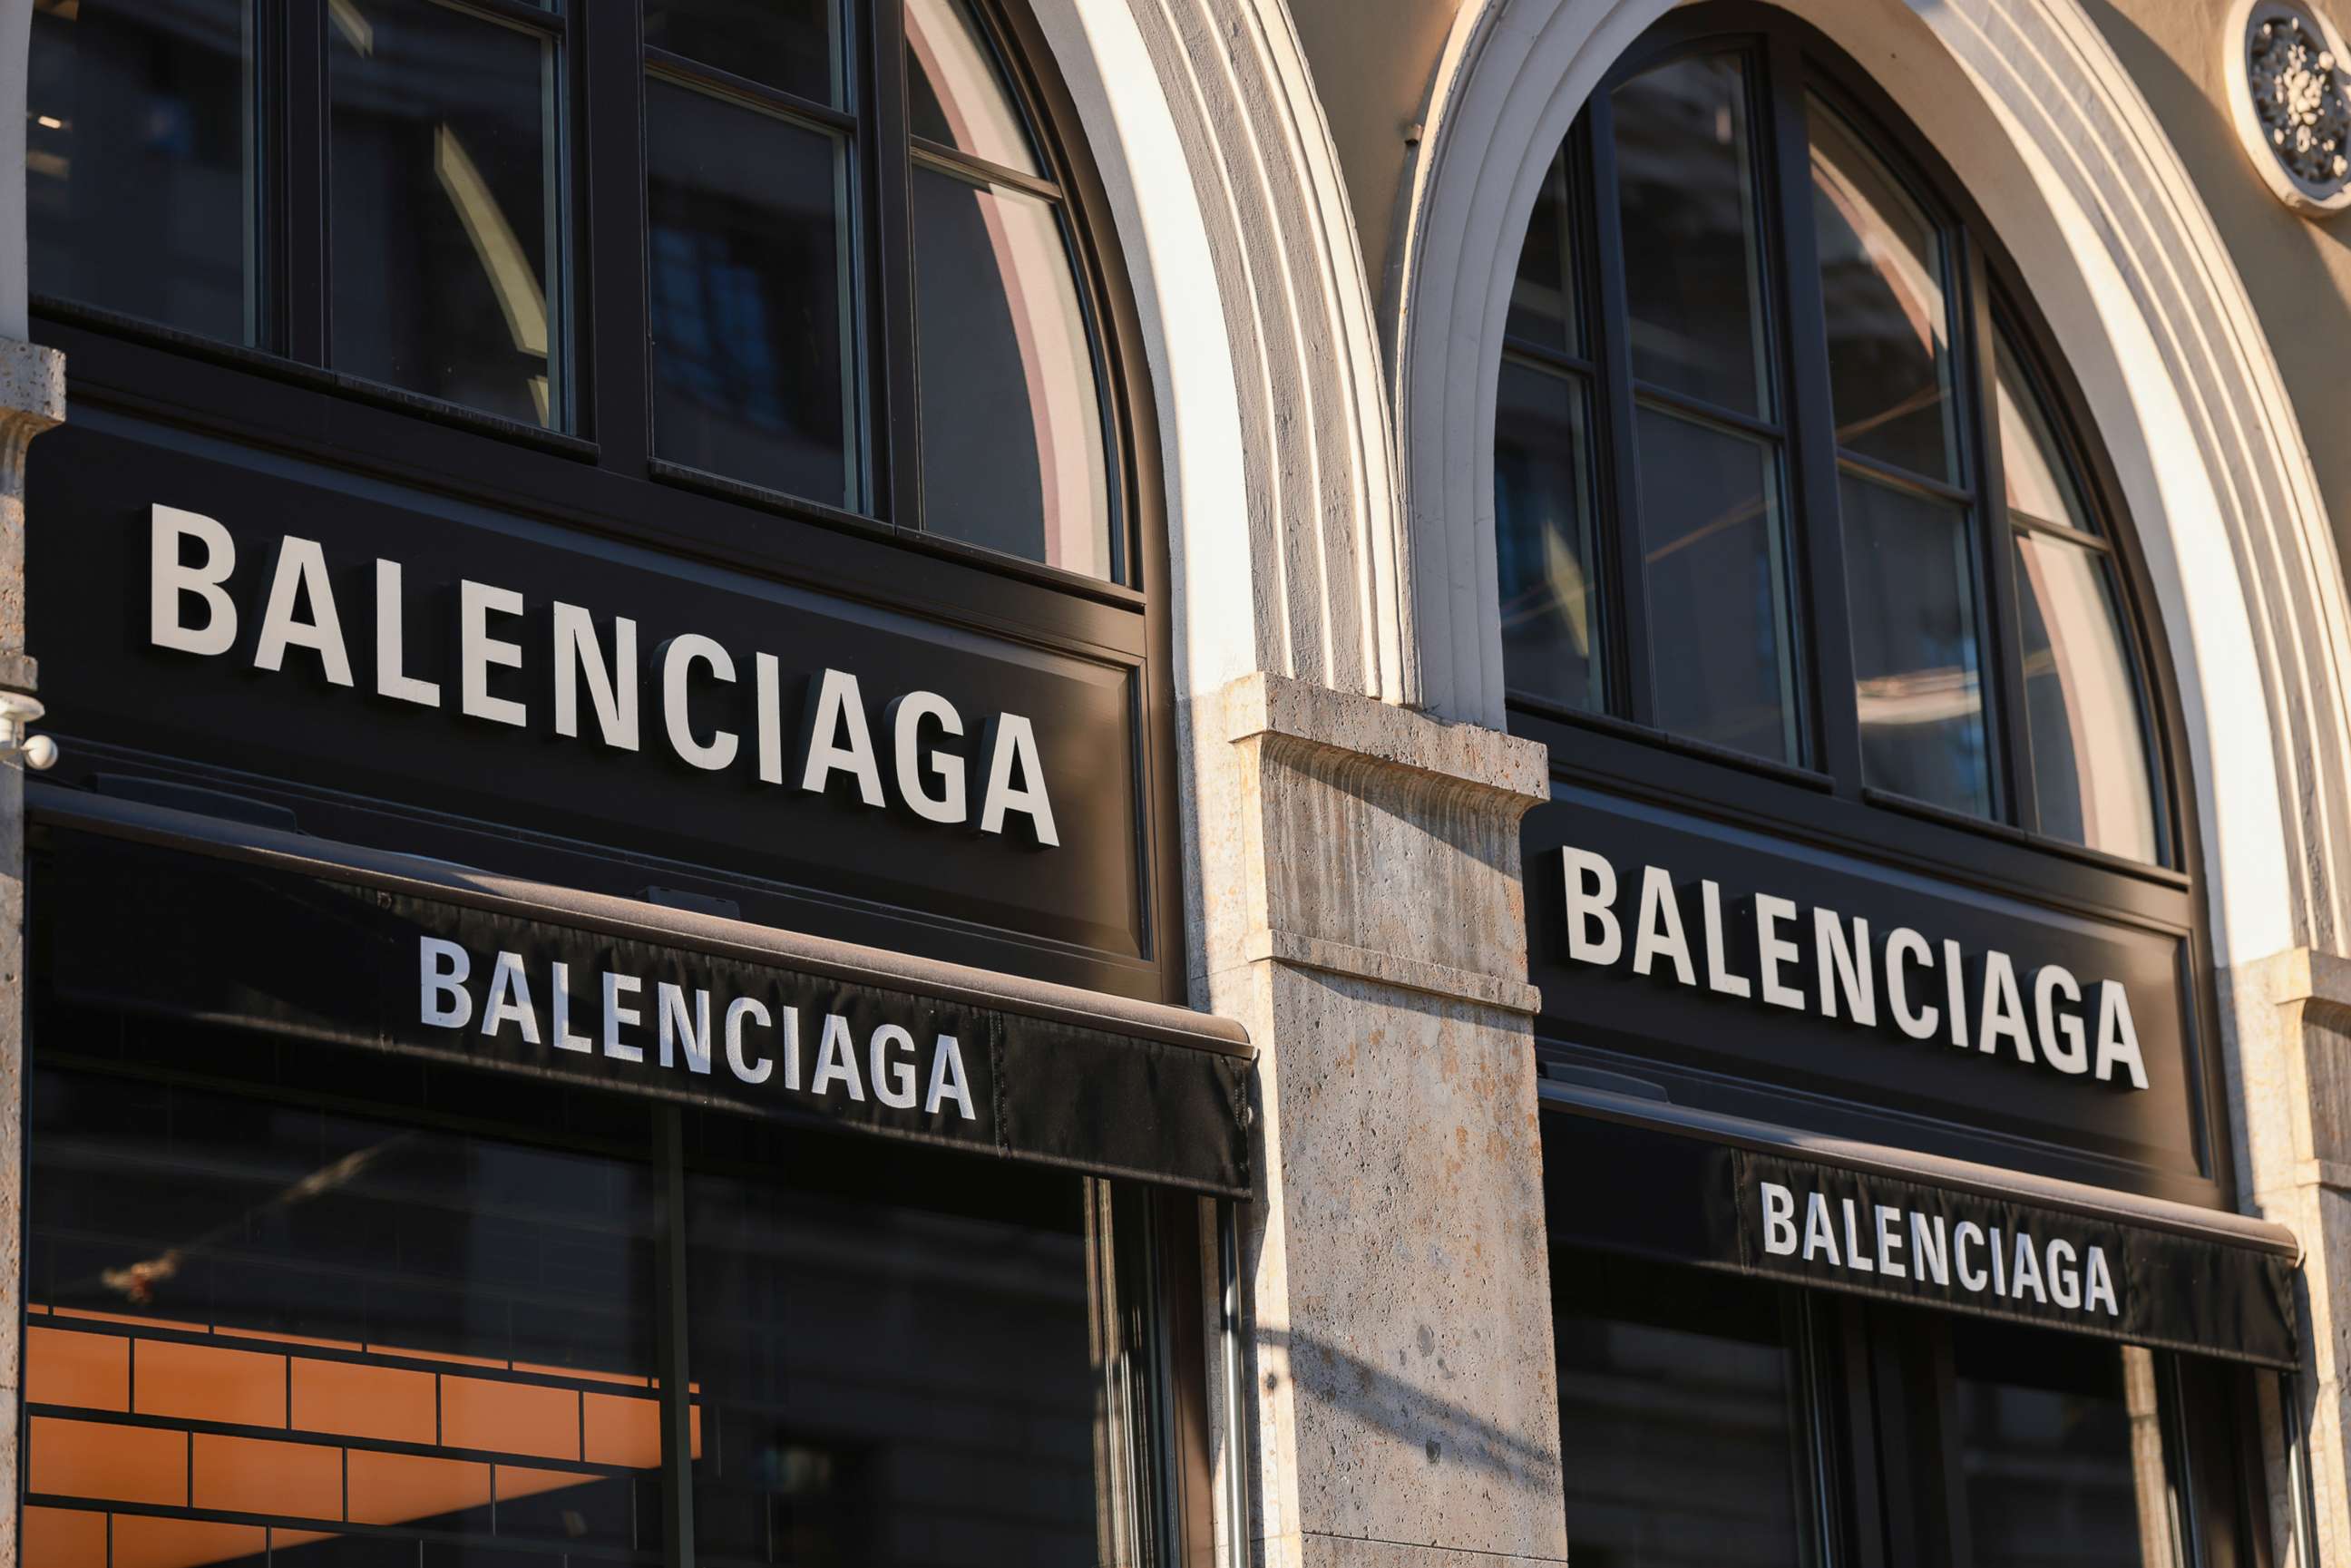 Balenciaga's Denma Gvasalia apology for 'inappropriate' ad kids - ABC